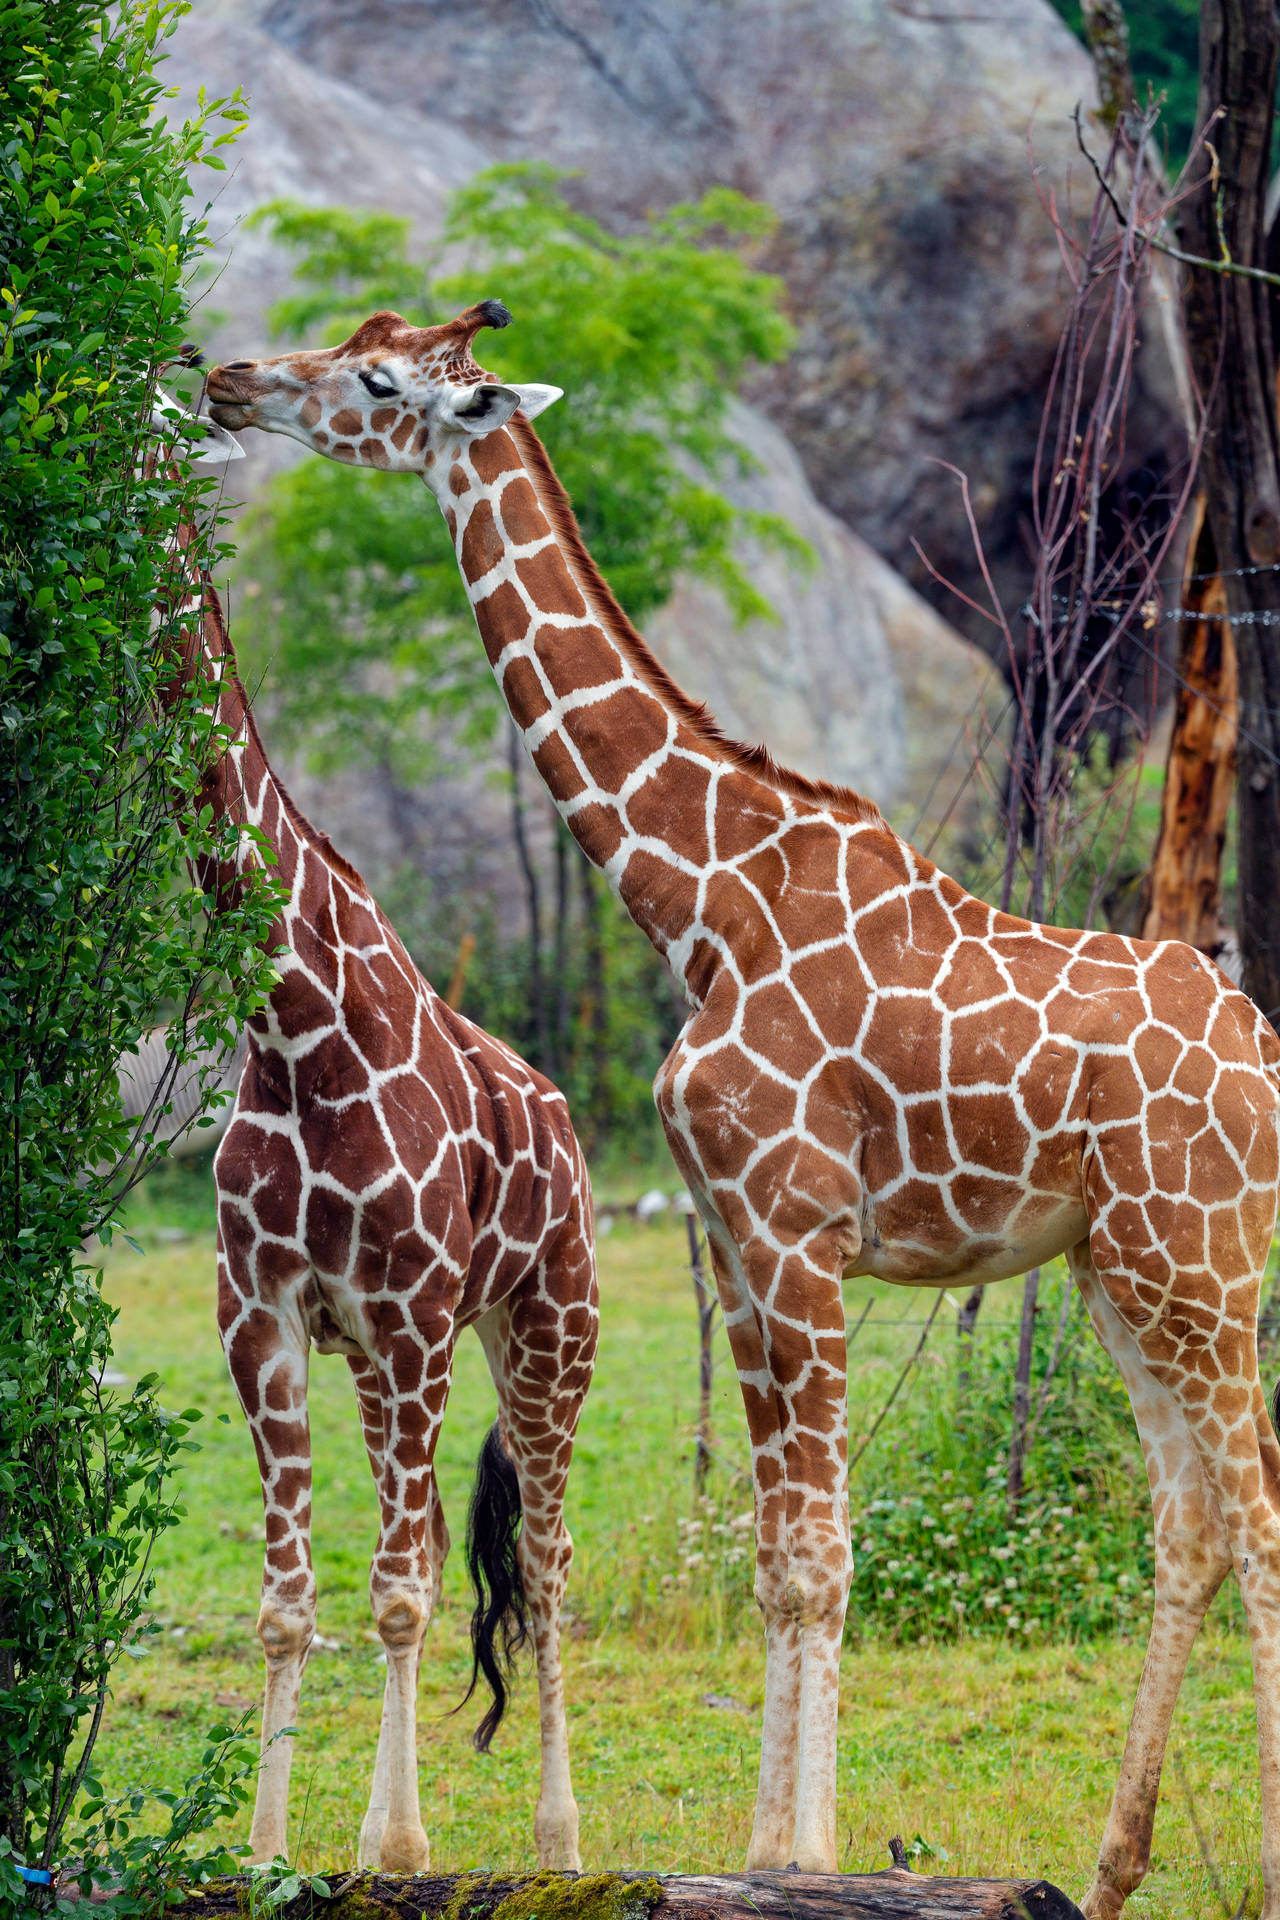 Two Giraffes Eating Background